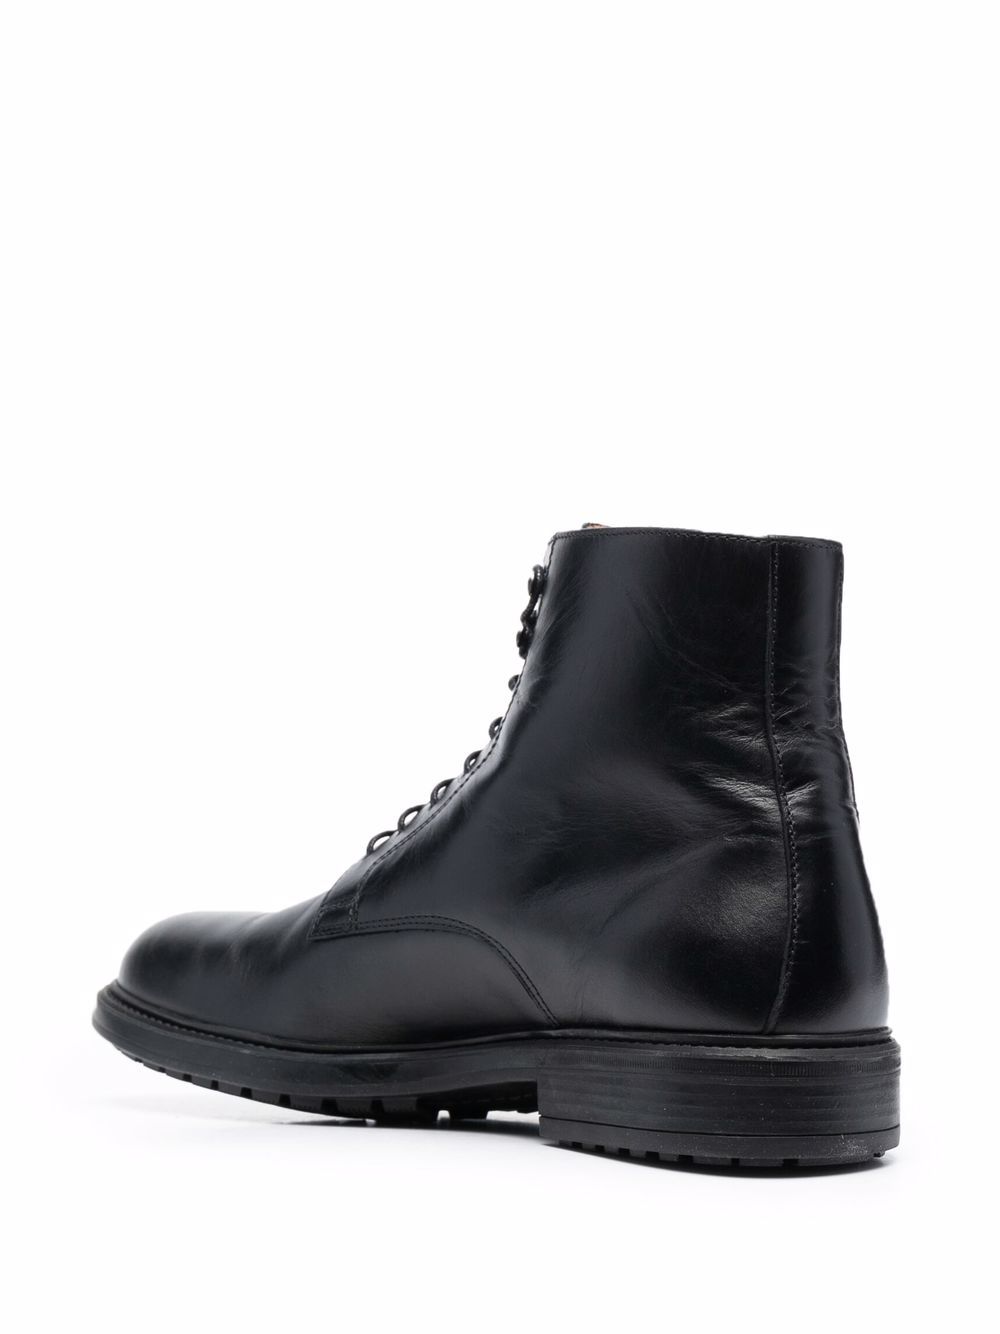 Officine Generale Dimitri Leather Boots - Farfetch